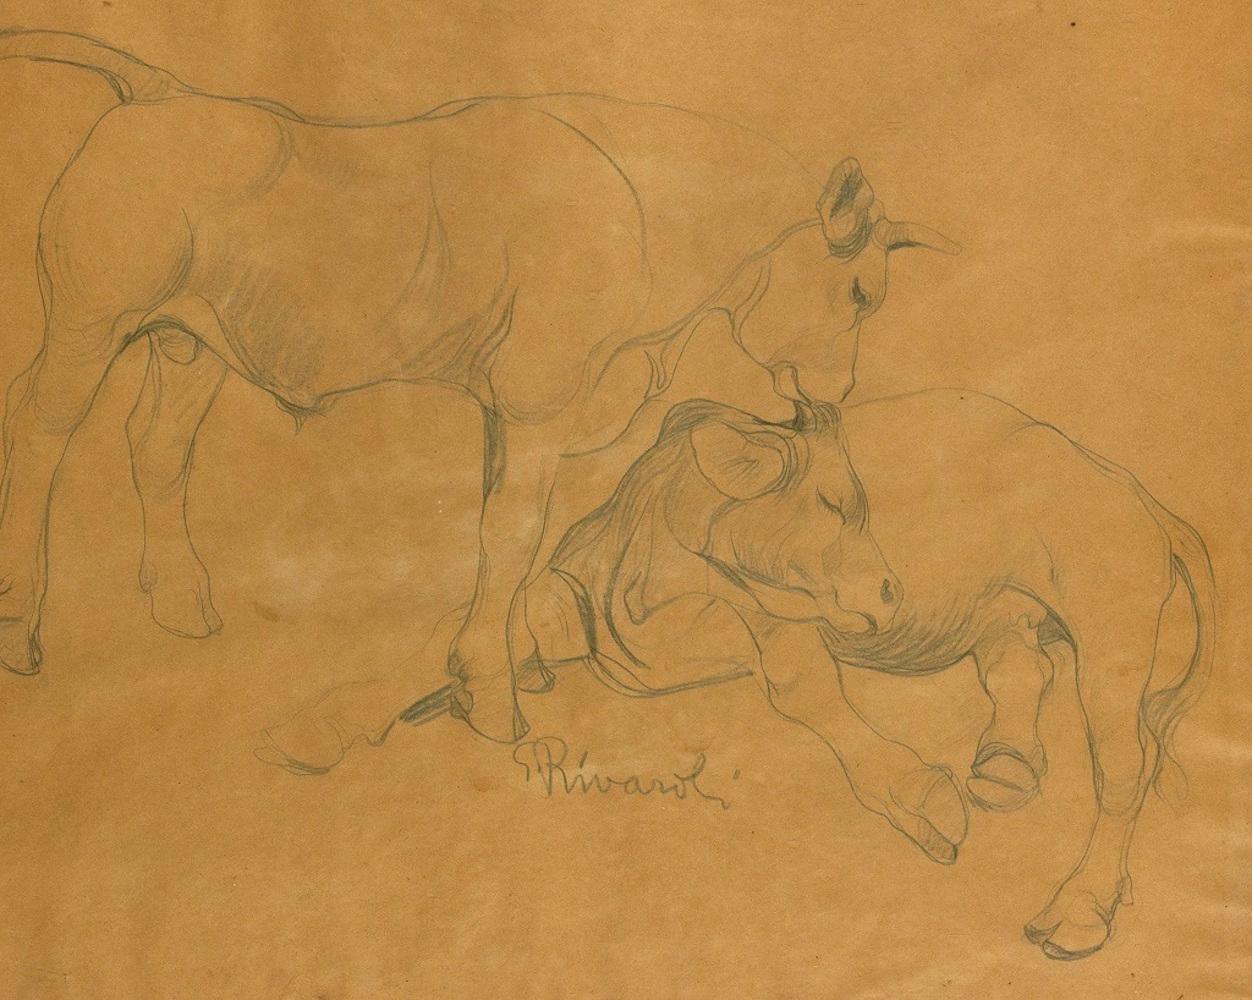 Oxen - Original Pencil Drawing by G. Rivaroli - 1930s - Art by Giuseppe Rivaroli